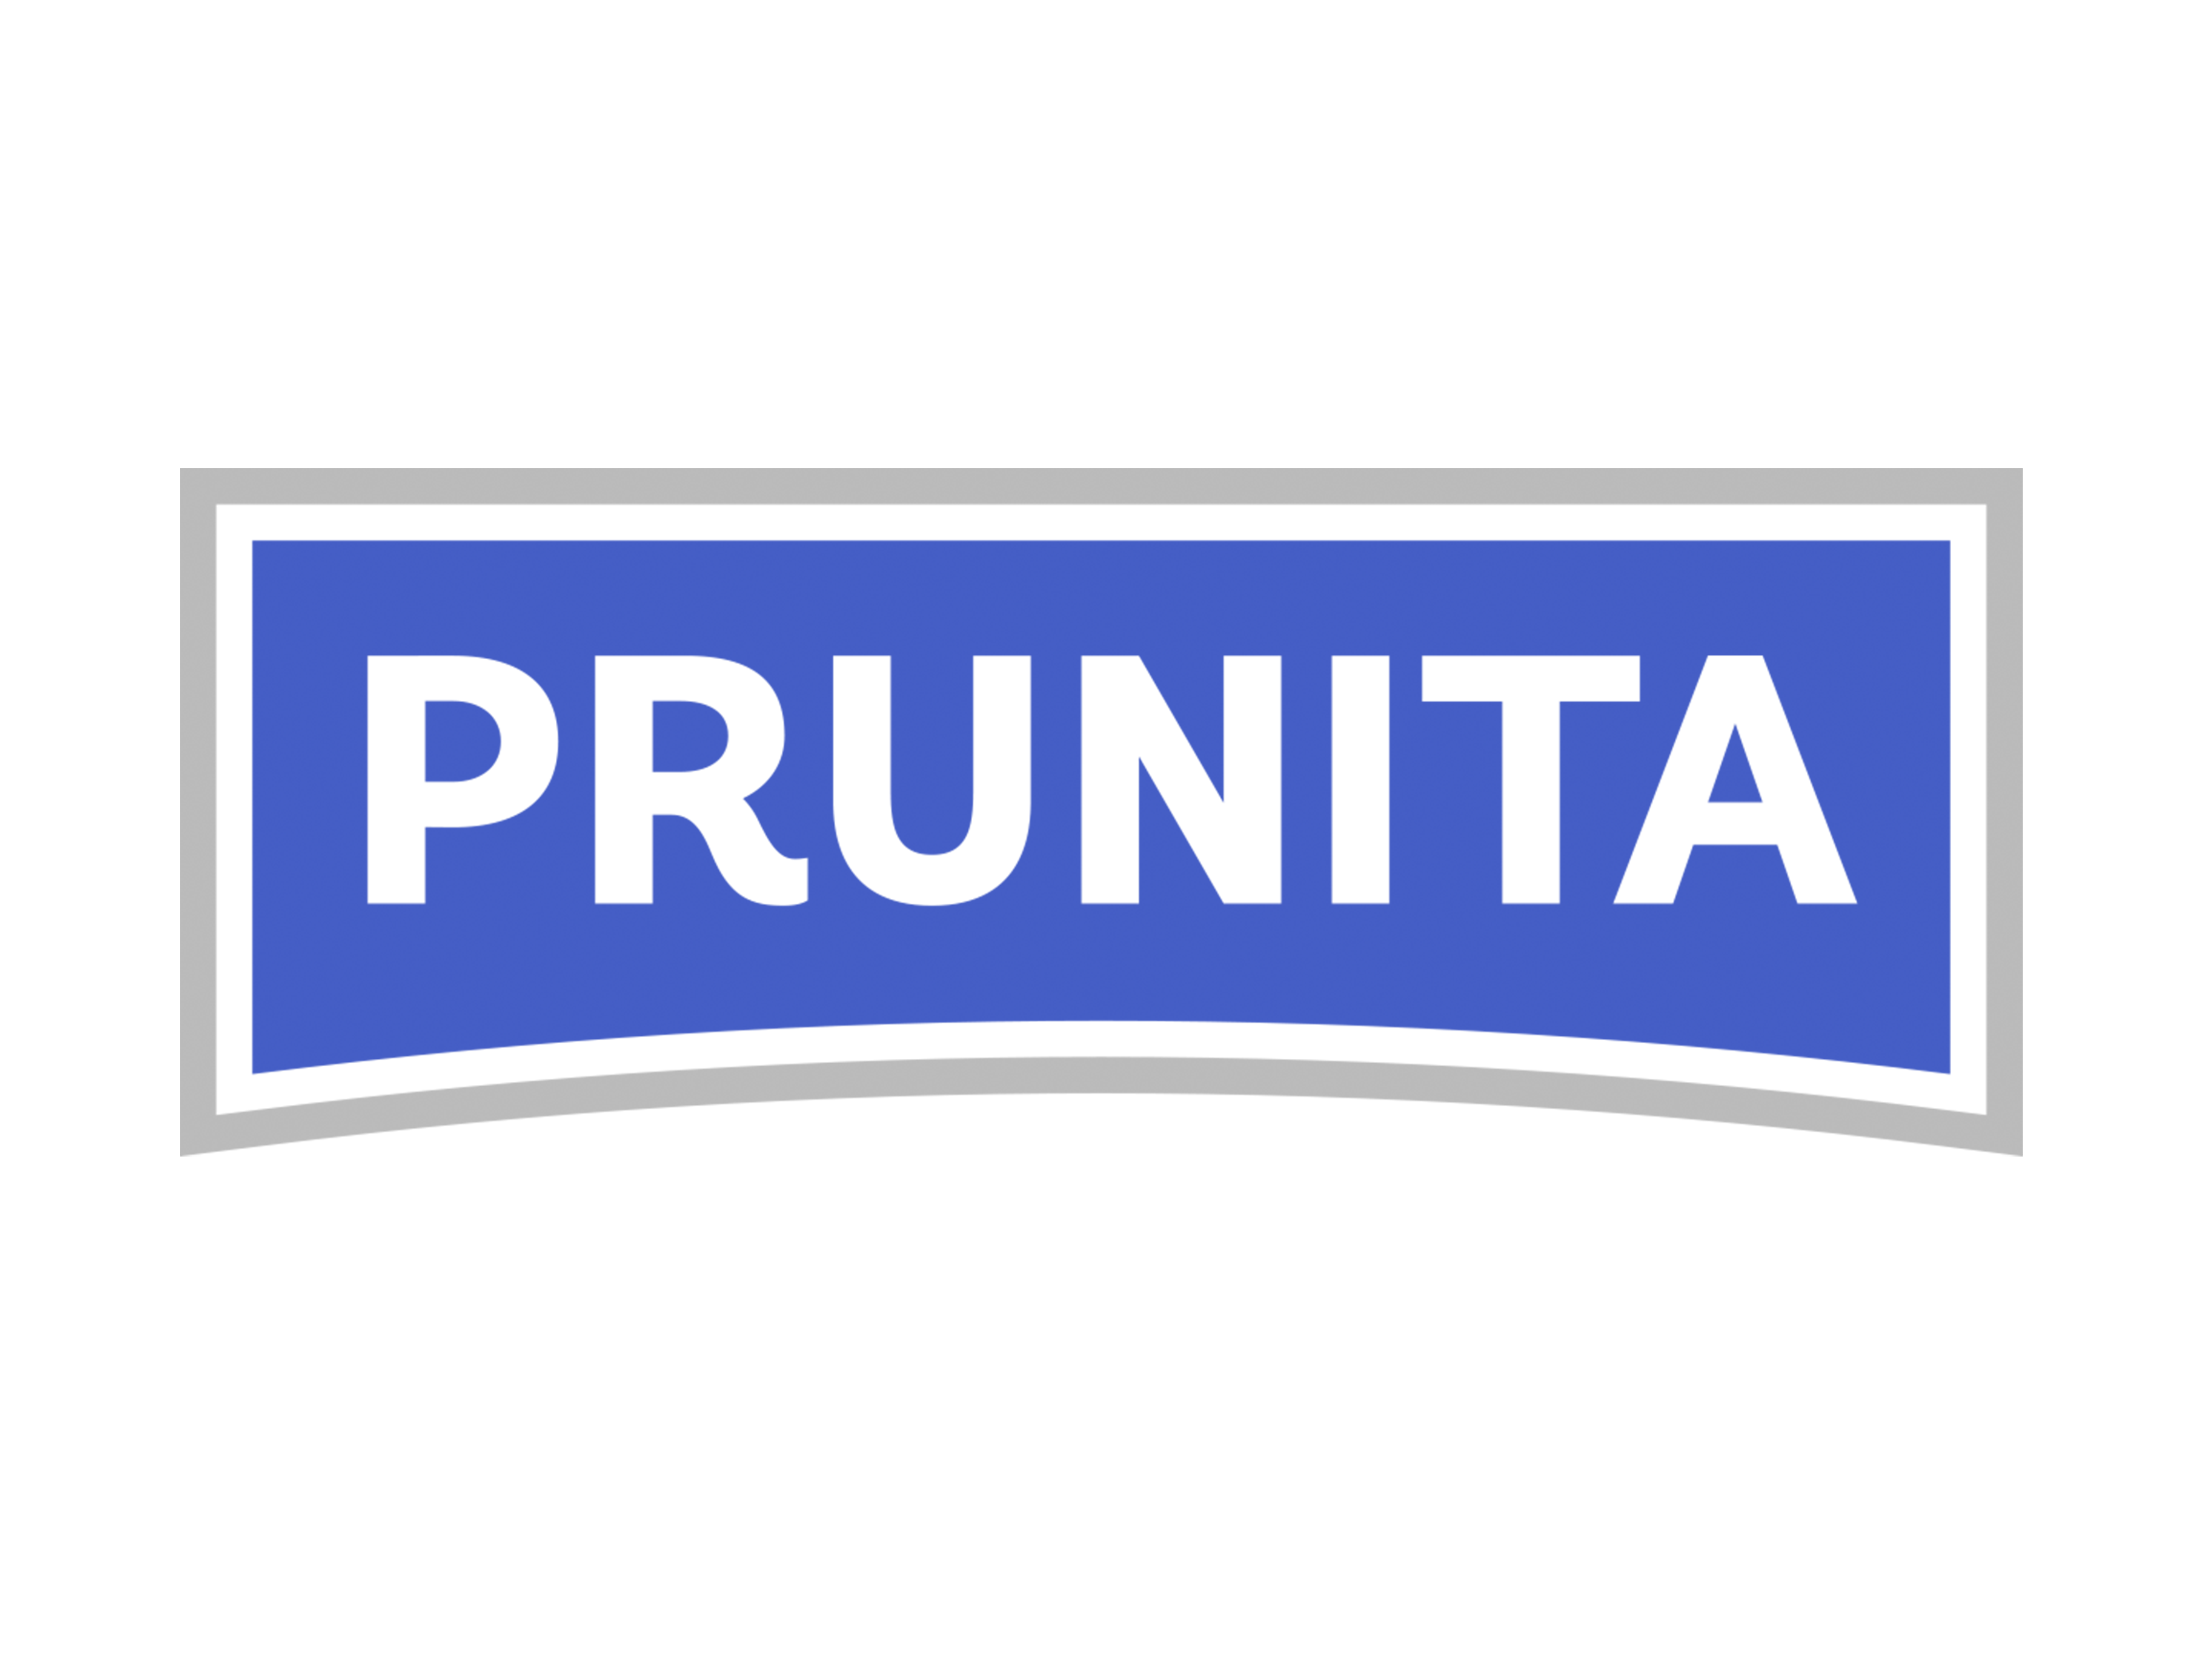 prunitA